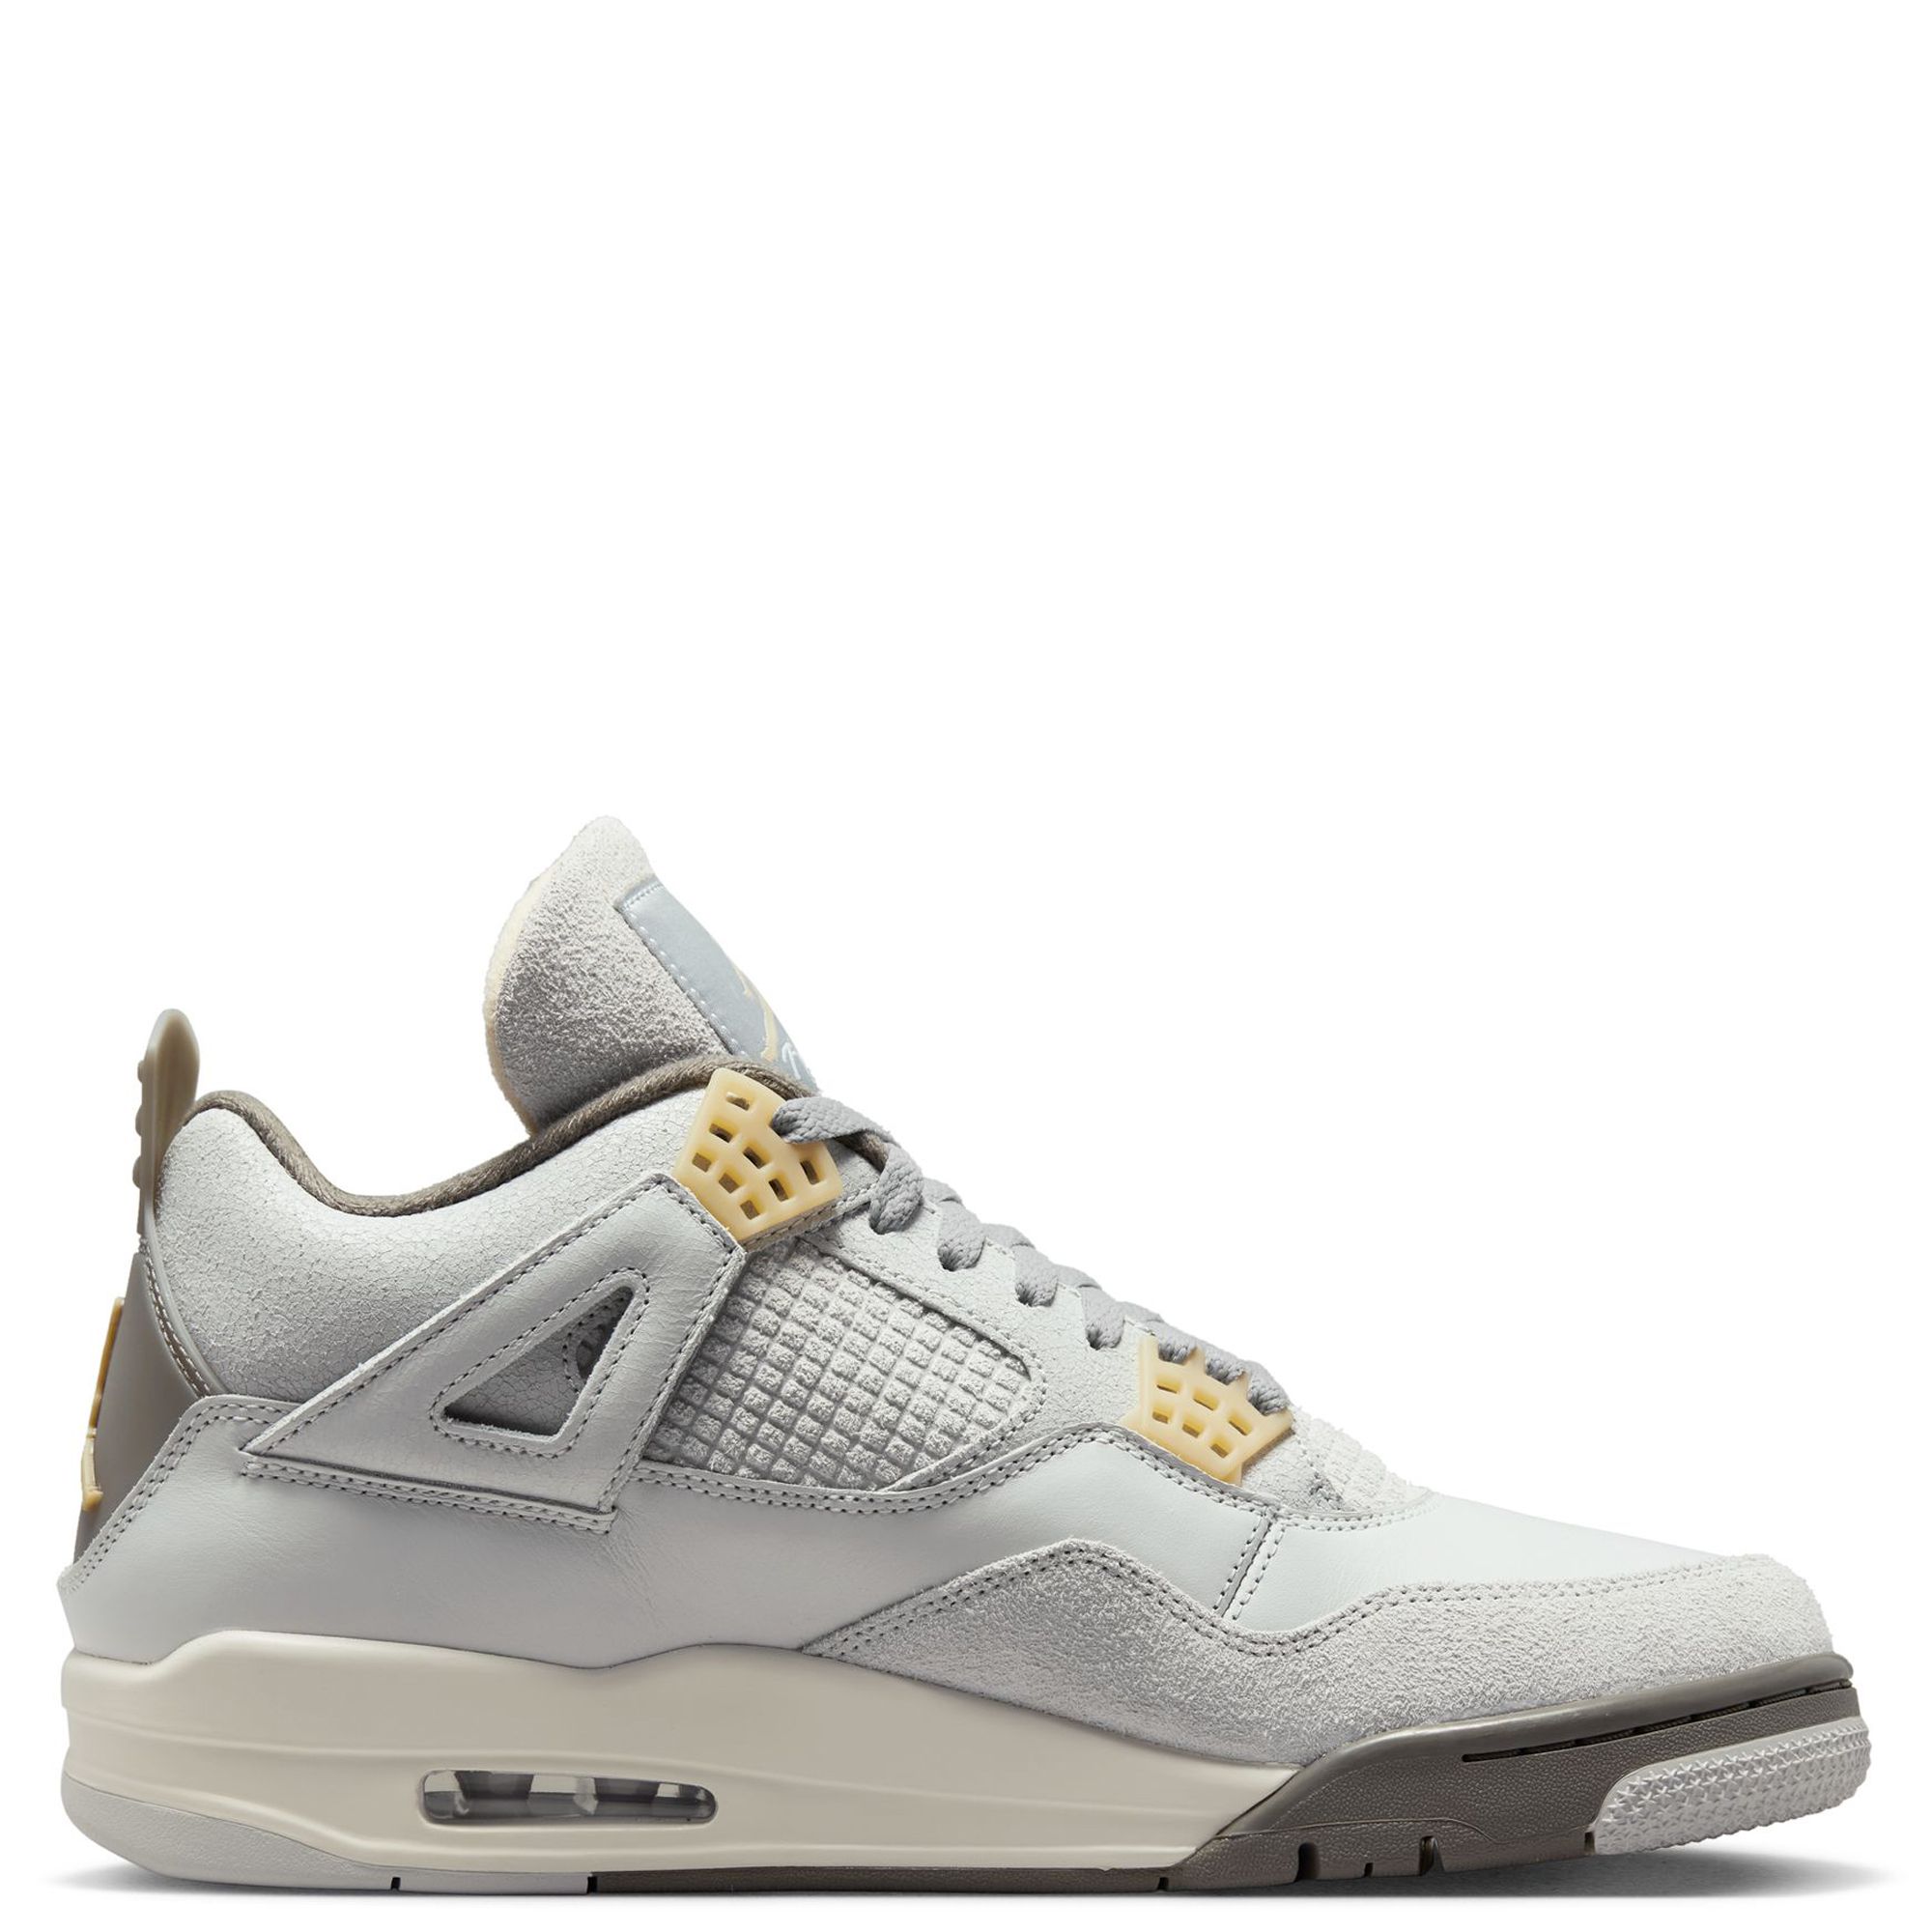 Sneakers Release – Jordan Retro 4 SE “Craft” Photon  Dust/Pale Vanilla/Off-White Men’s & Grade School Kids’  Shoe Launching 2/11